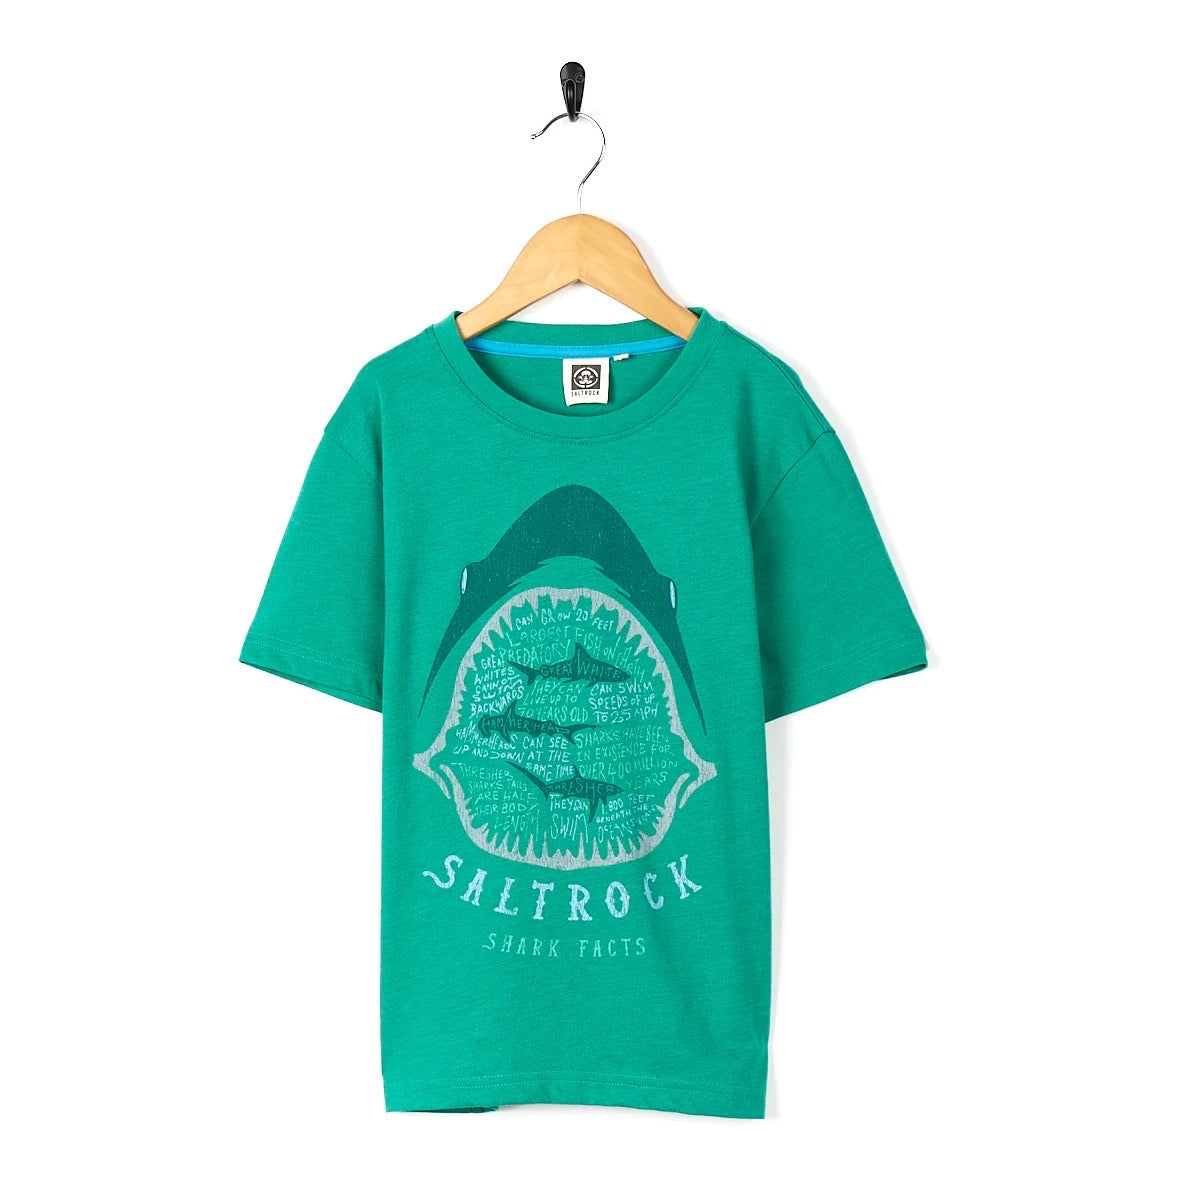 Saltrock Shark Facts T-Shirt Clothing 7/8YRS / Green,9/10YRS / Green,11/12YRS / Green,13YRS / Green